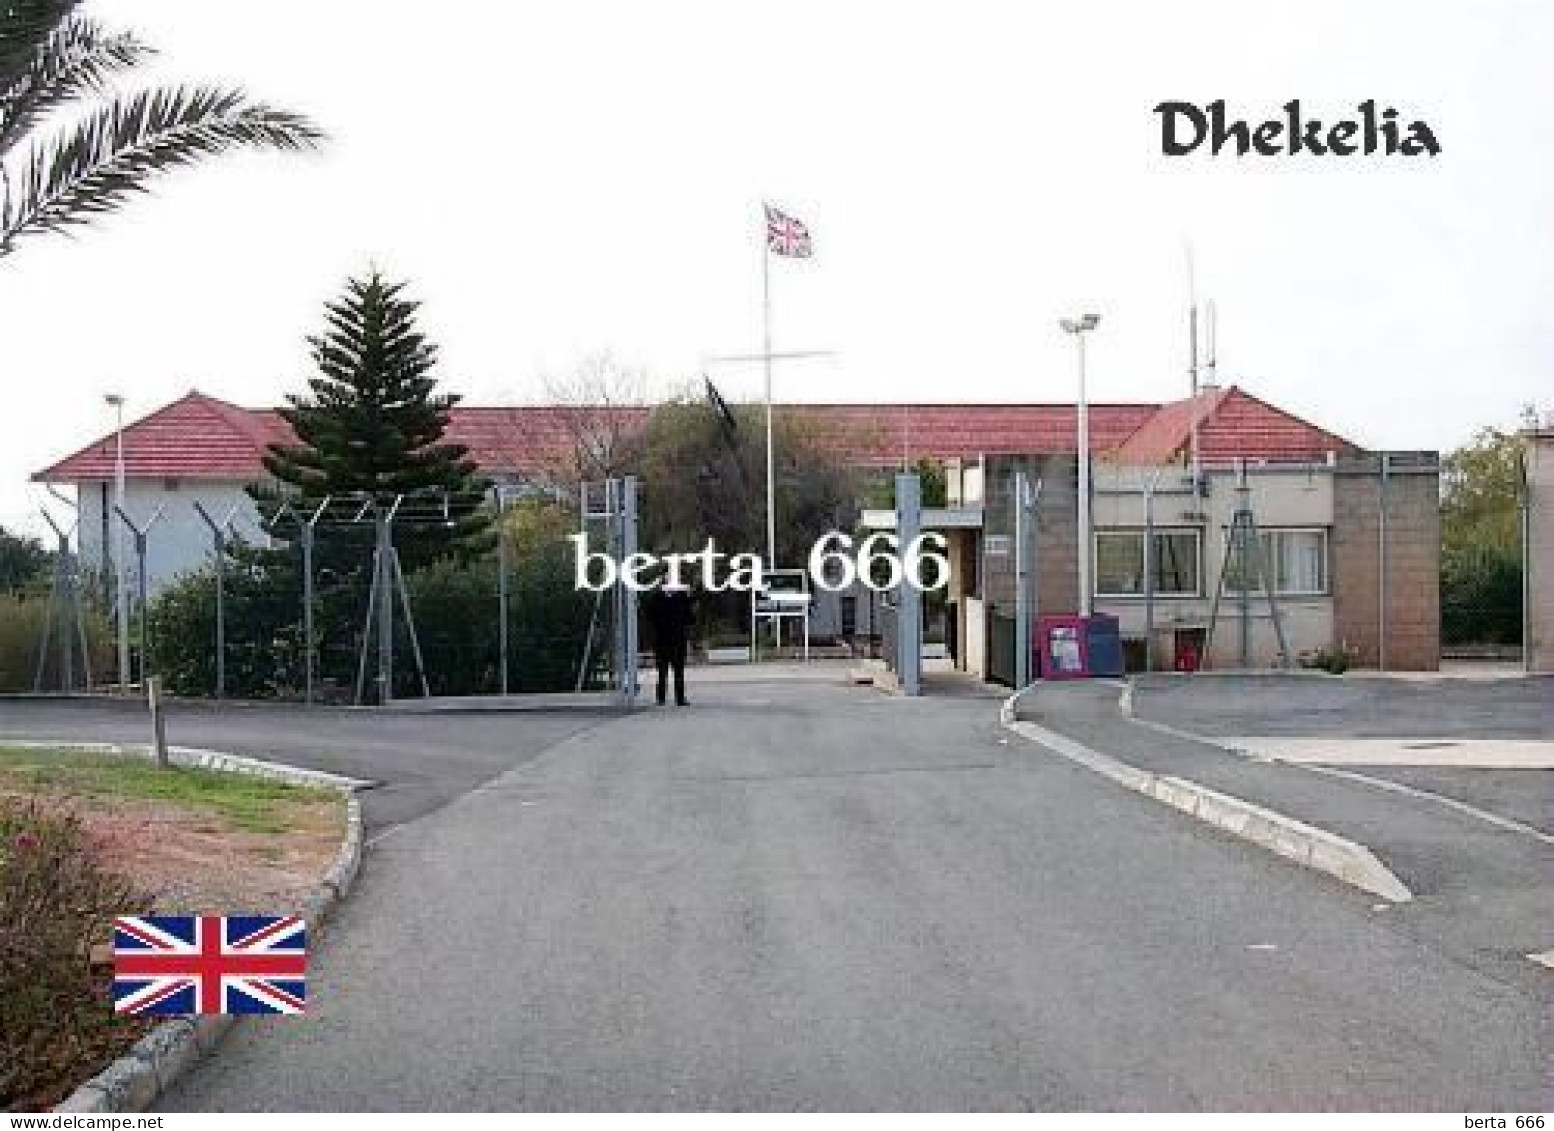 Dhekelia British Sovereign Base Cyprus New Postcard - Chypre